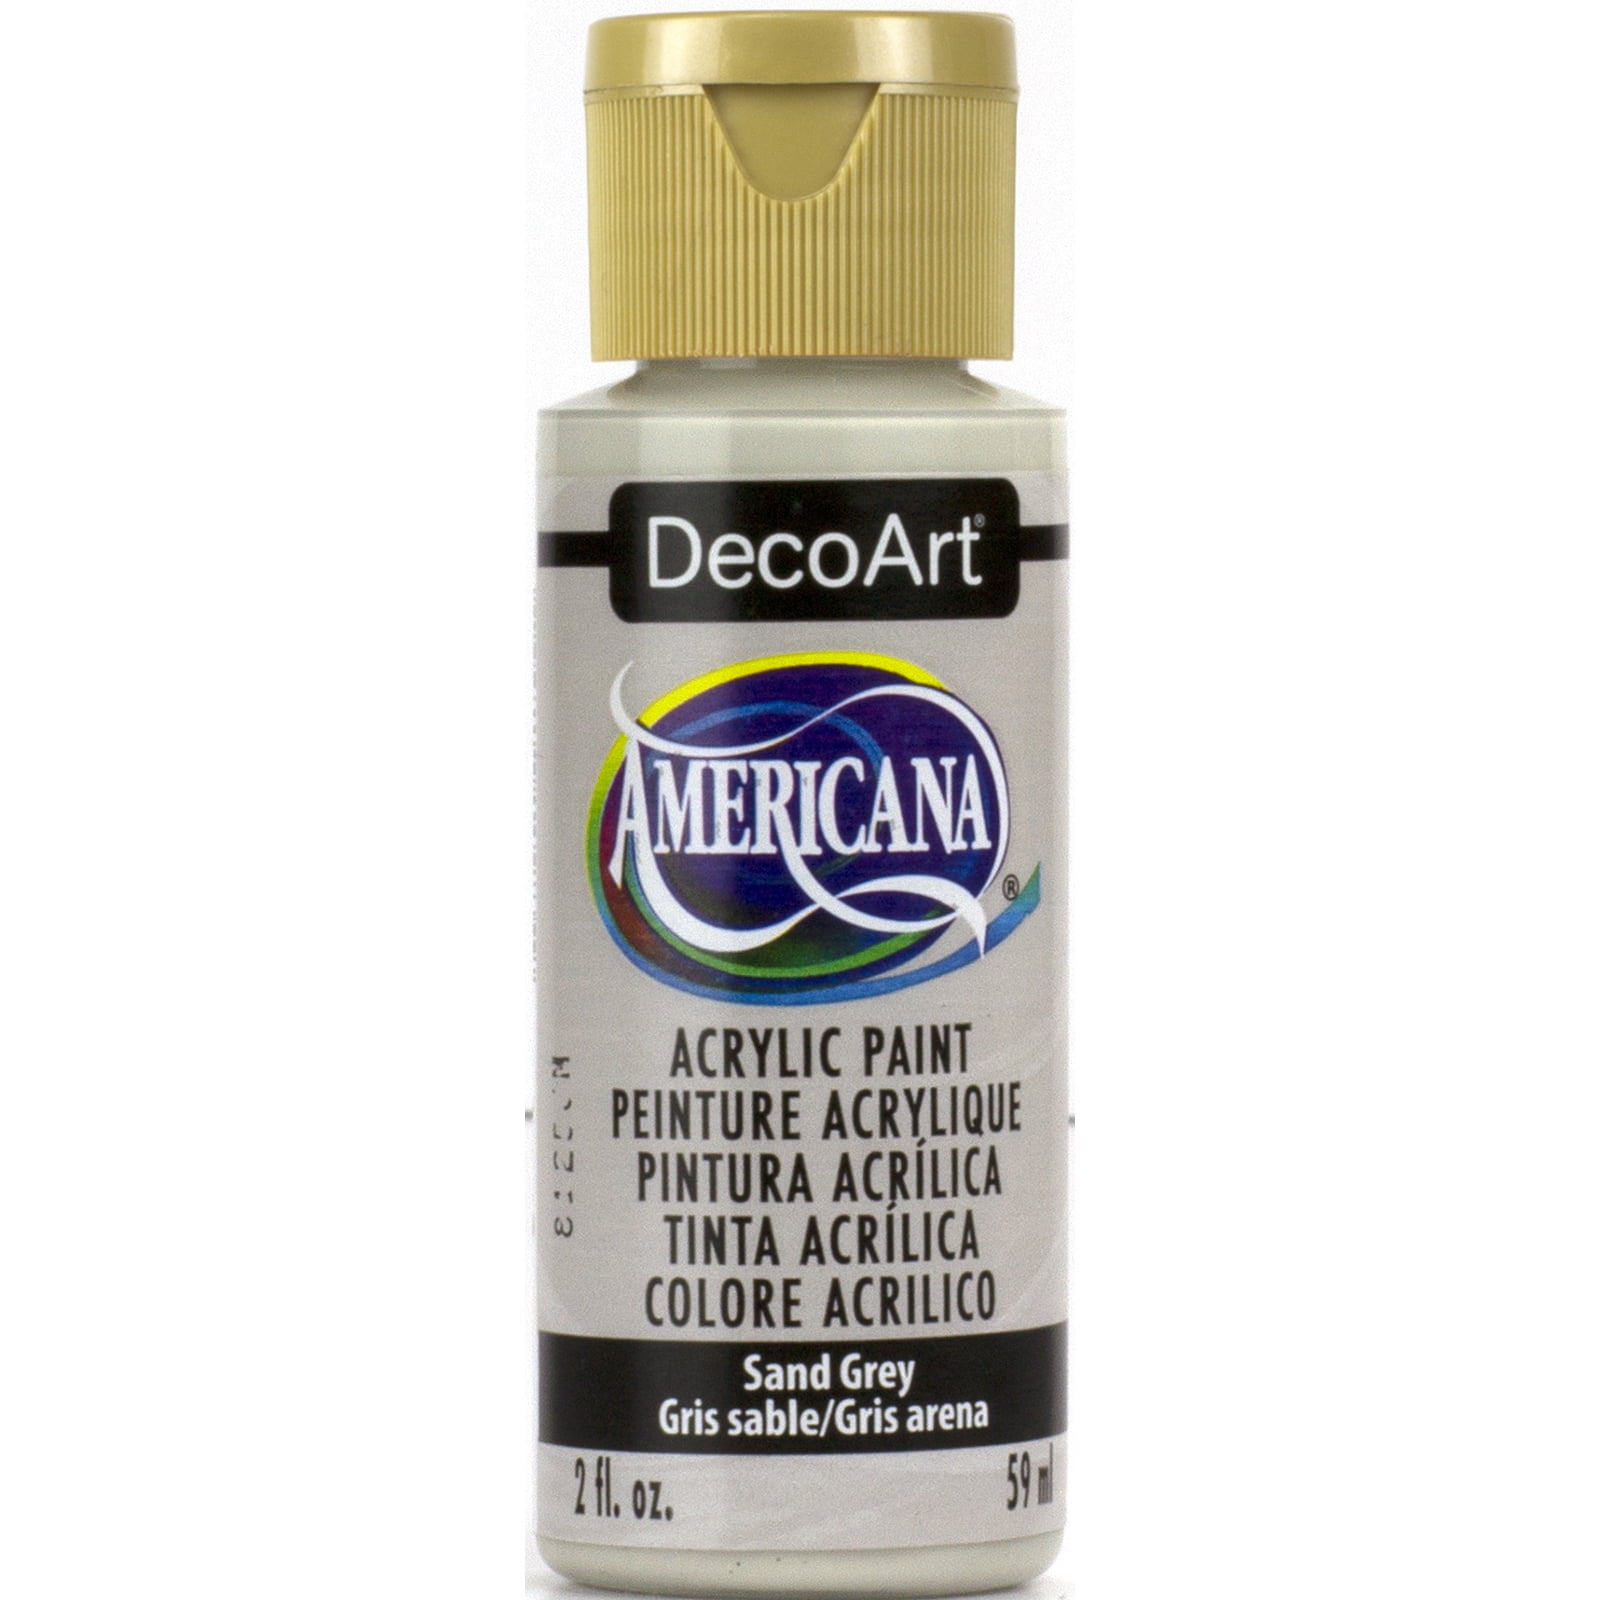 DecoArt Americana Acrylic Paint - Tropical Blue, 2 oz